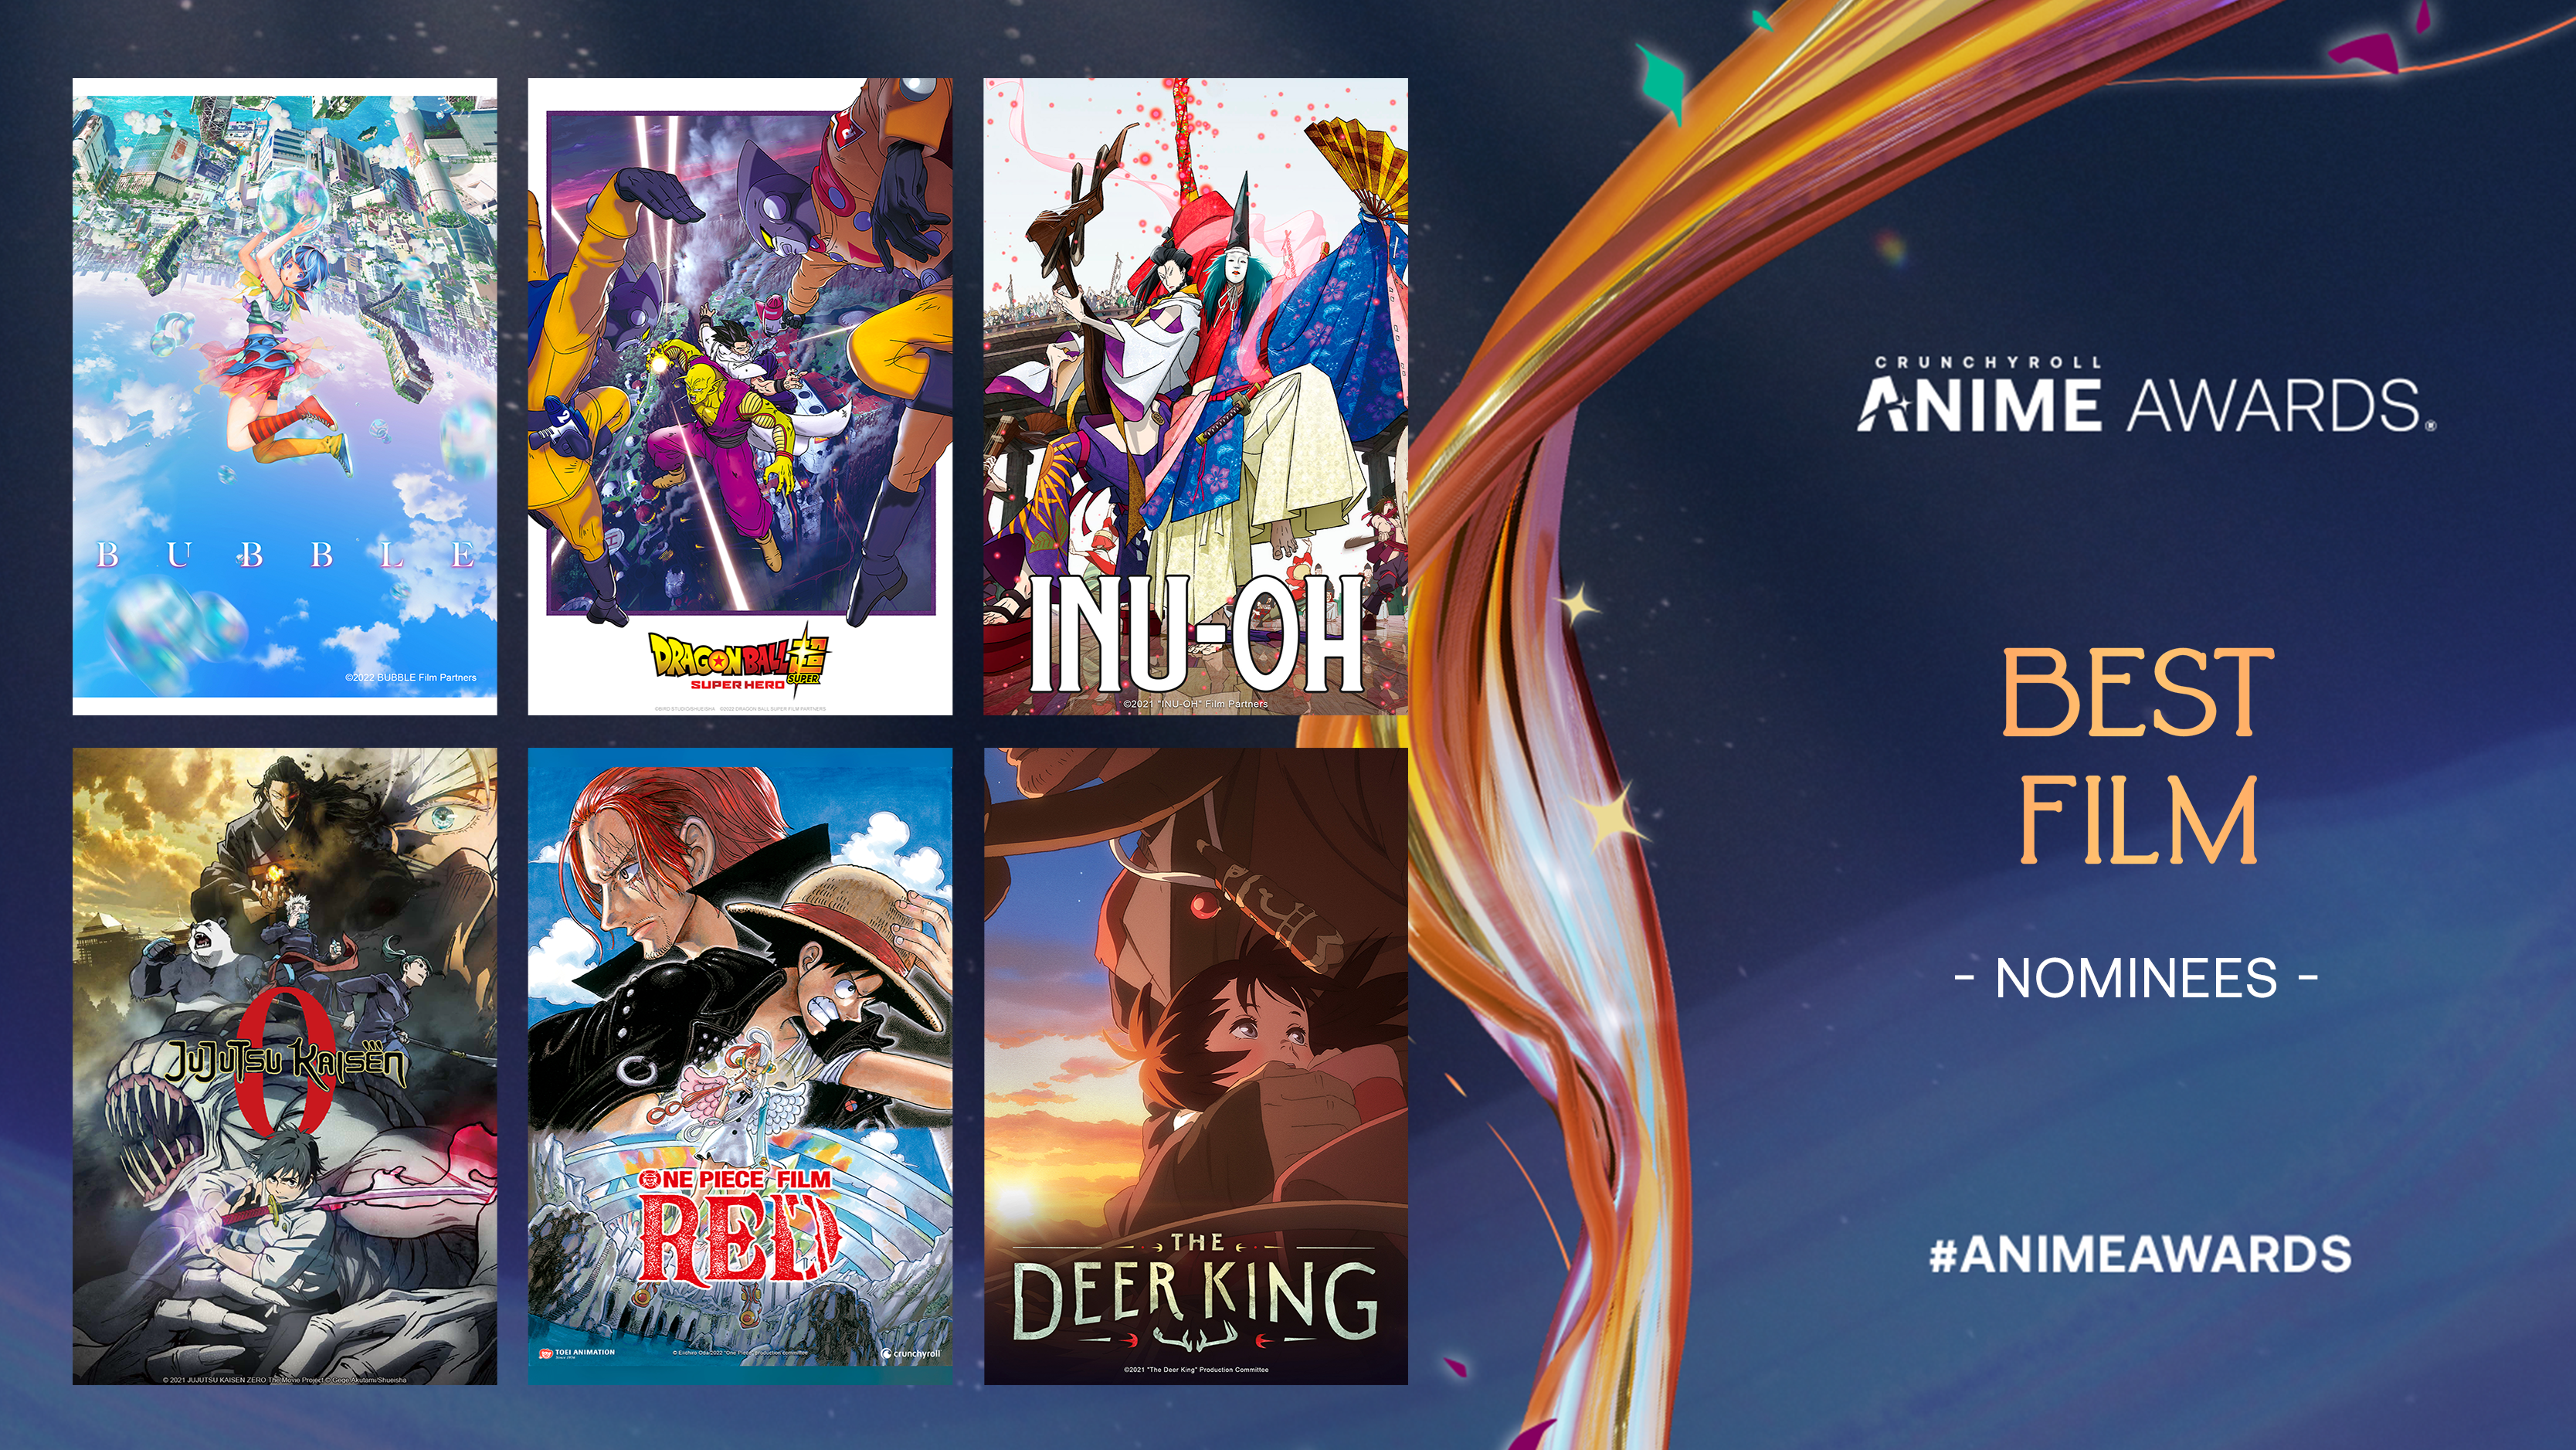 Cyberpunk: Edgerunners' Wins Anime of the Year at Crunchyroll Anime Awards  | Animation Magazine